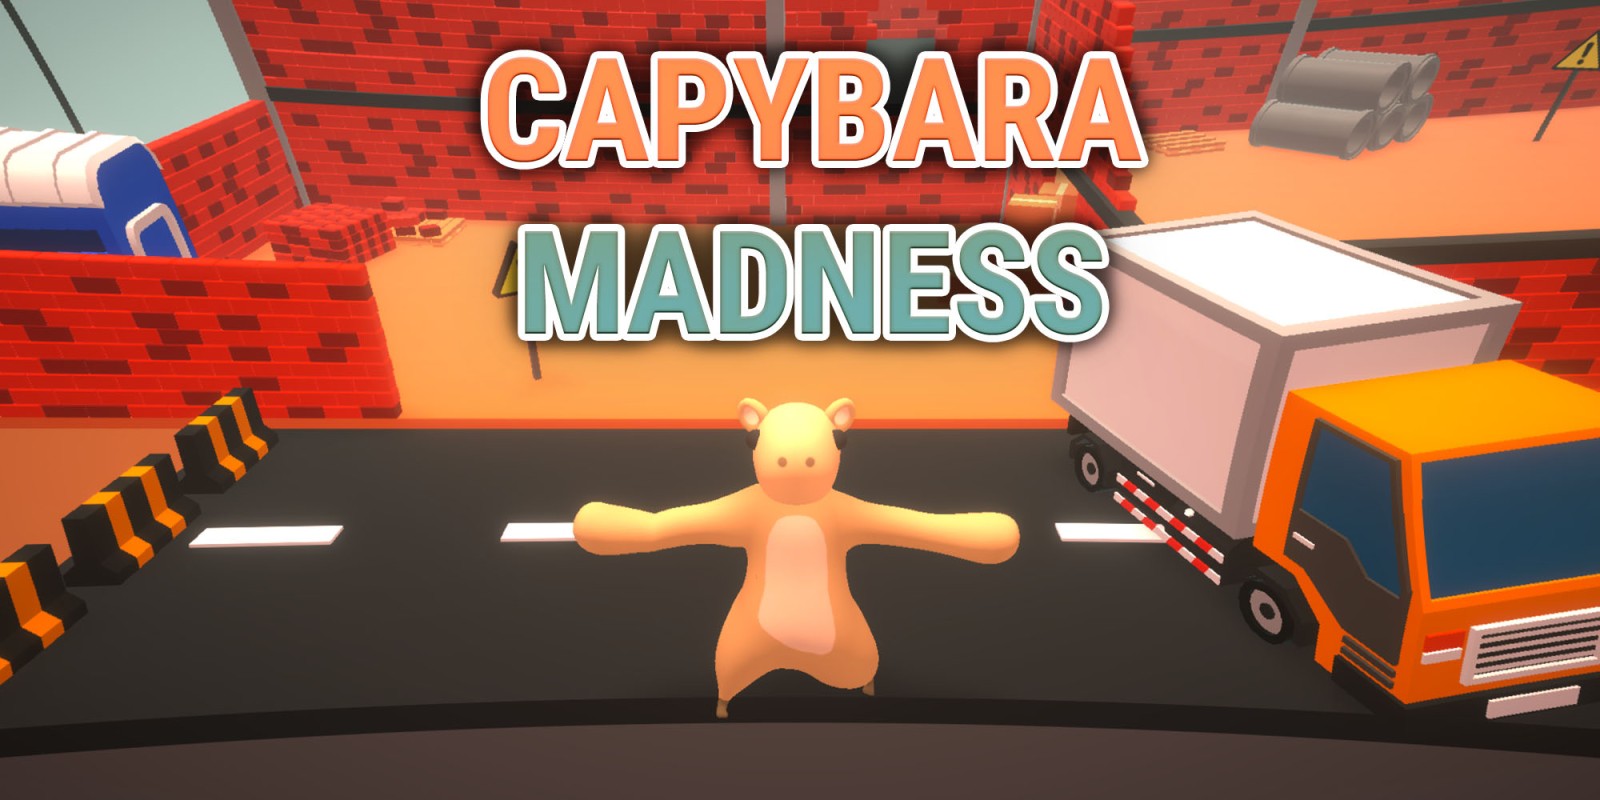 Capybara Madness